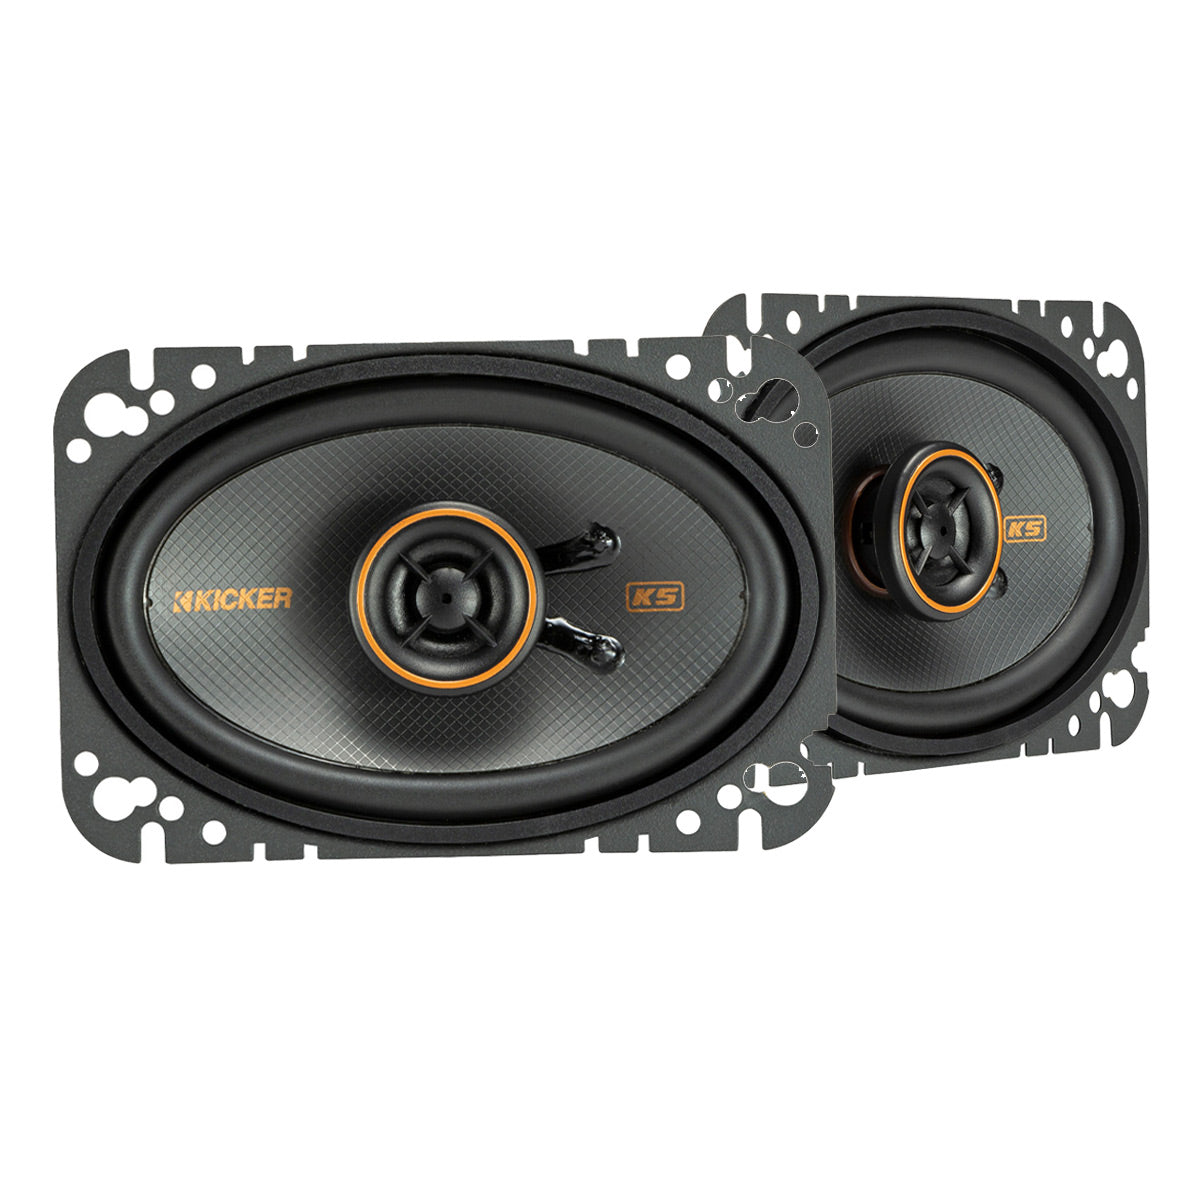 Kicker 51KSC4604 4x6" KS Series Coaxial Speakers - Pair